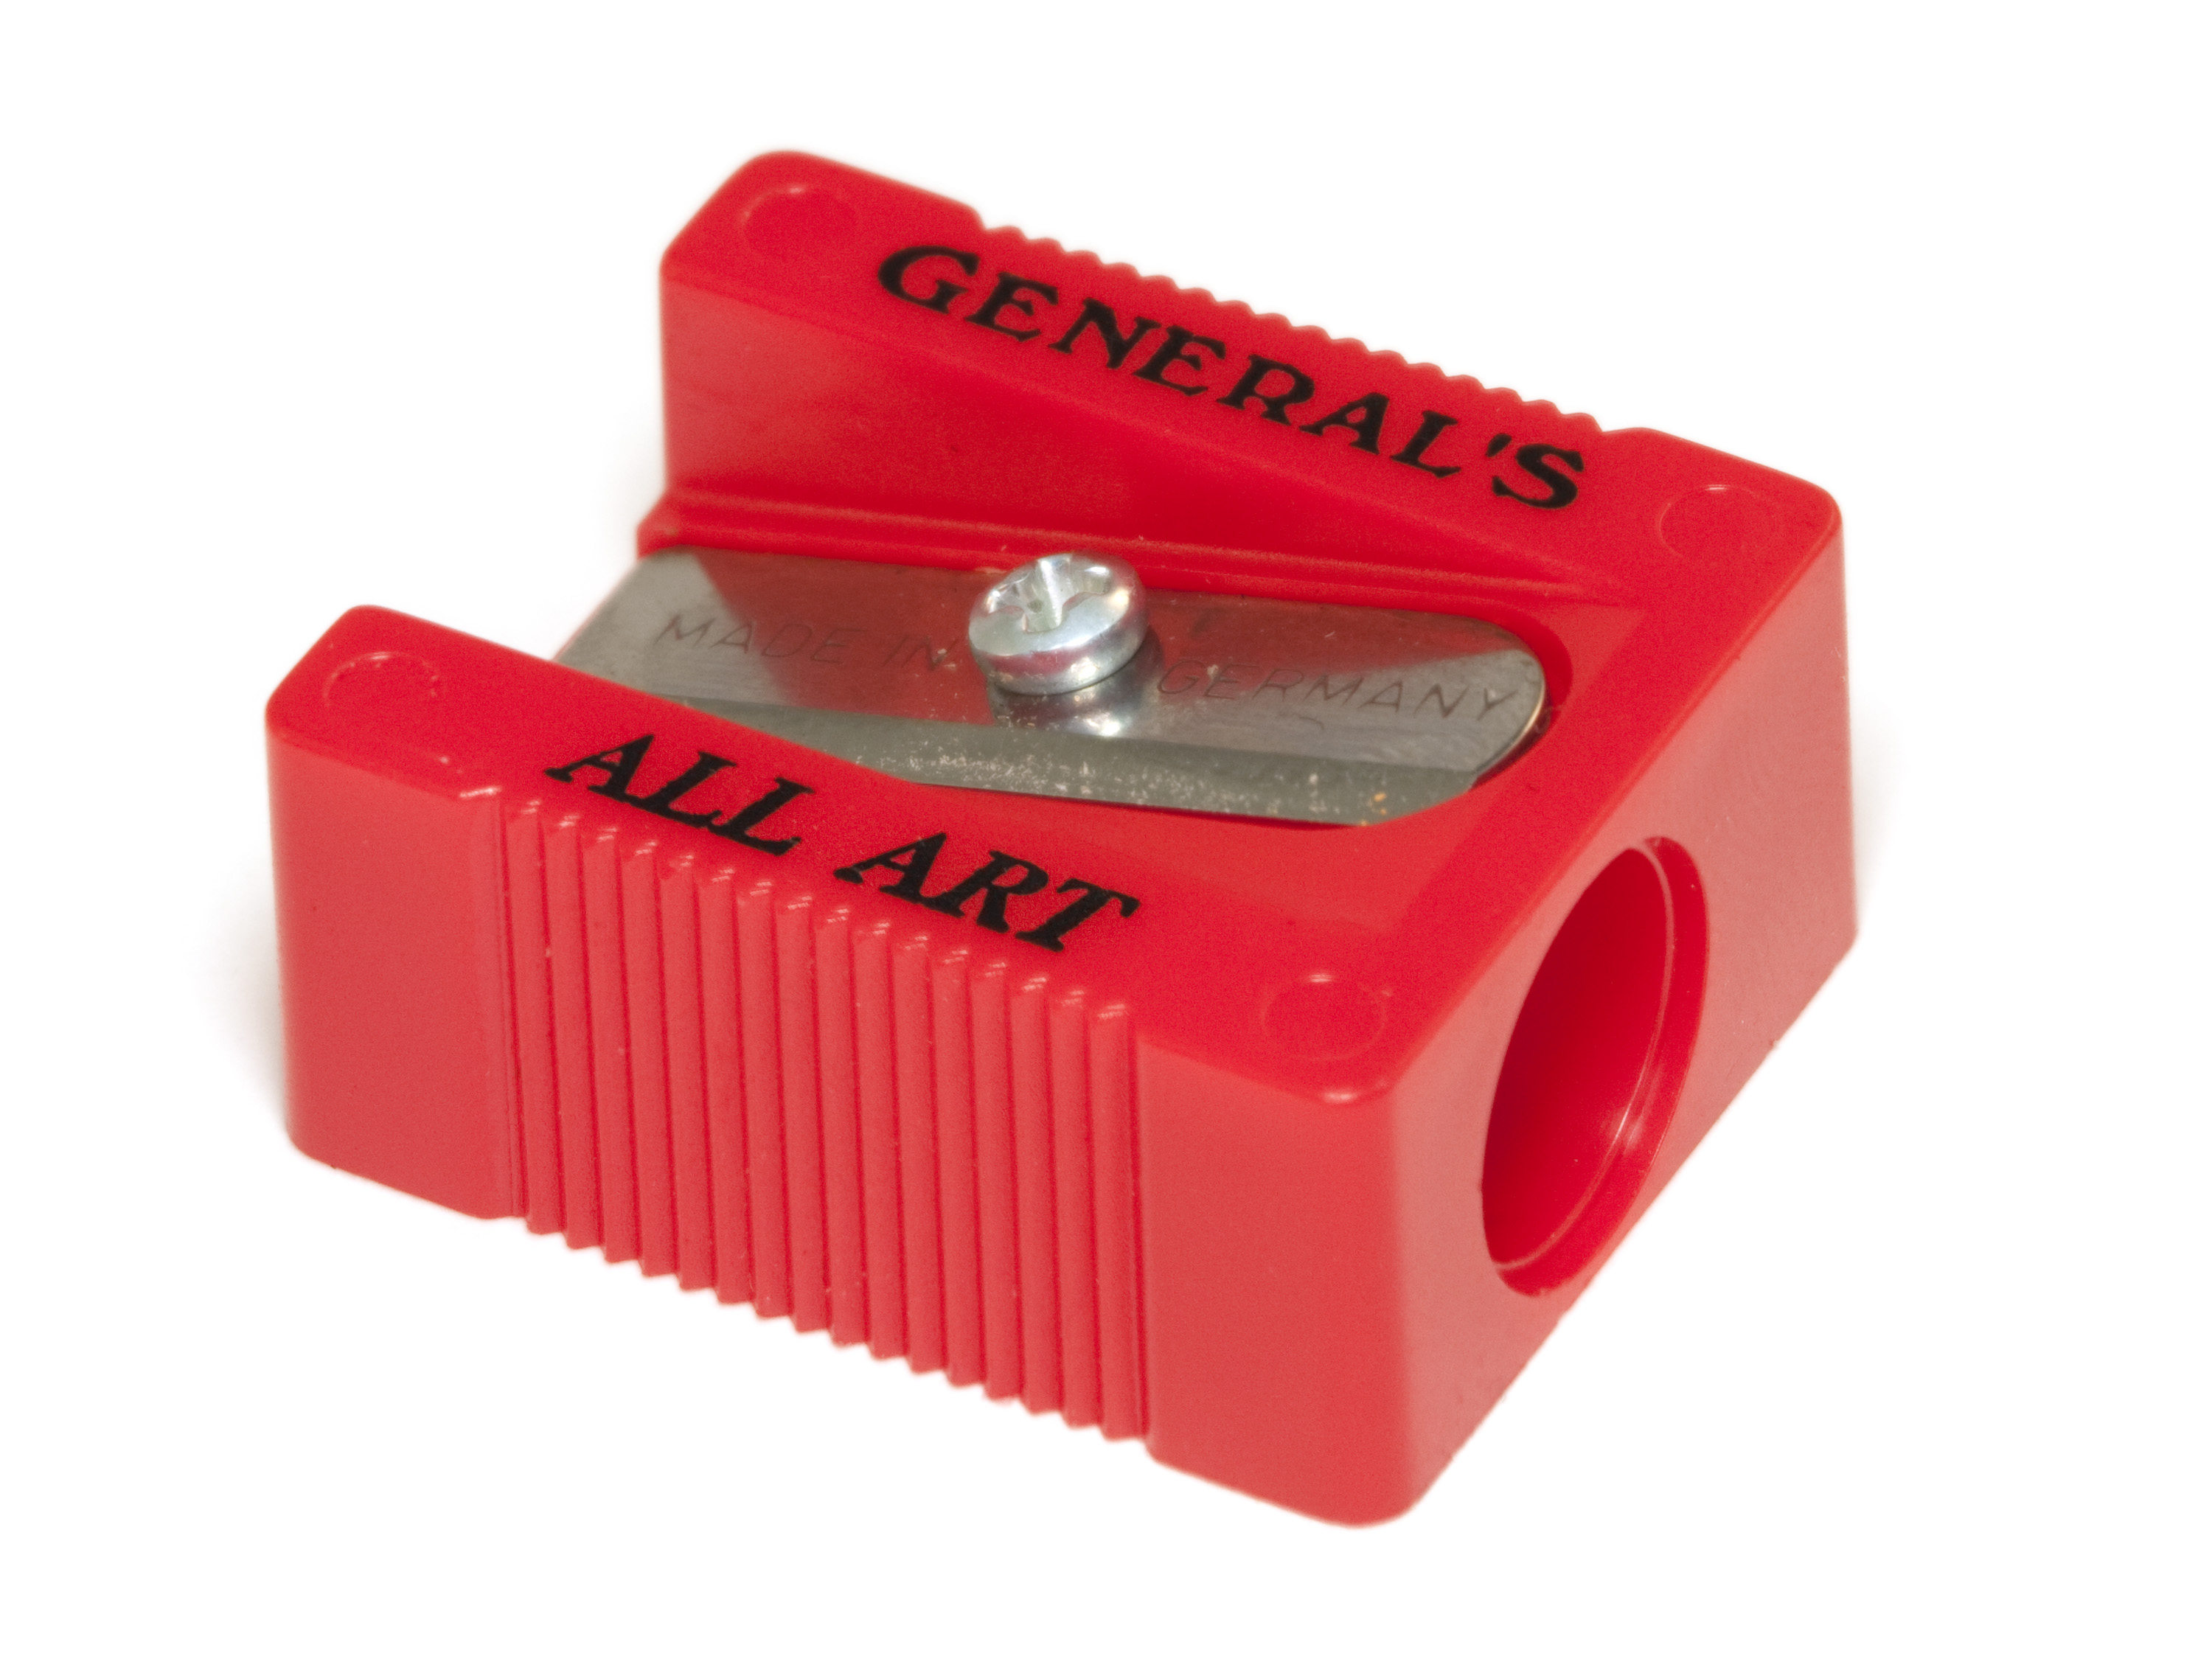 File:Red pencil sharpener.jpg - Wikimedia Commons